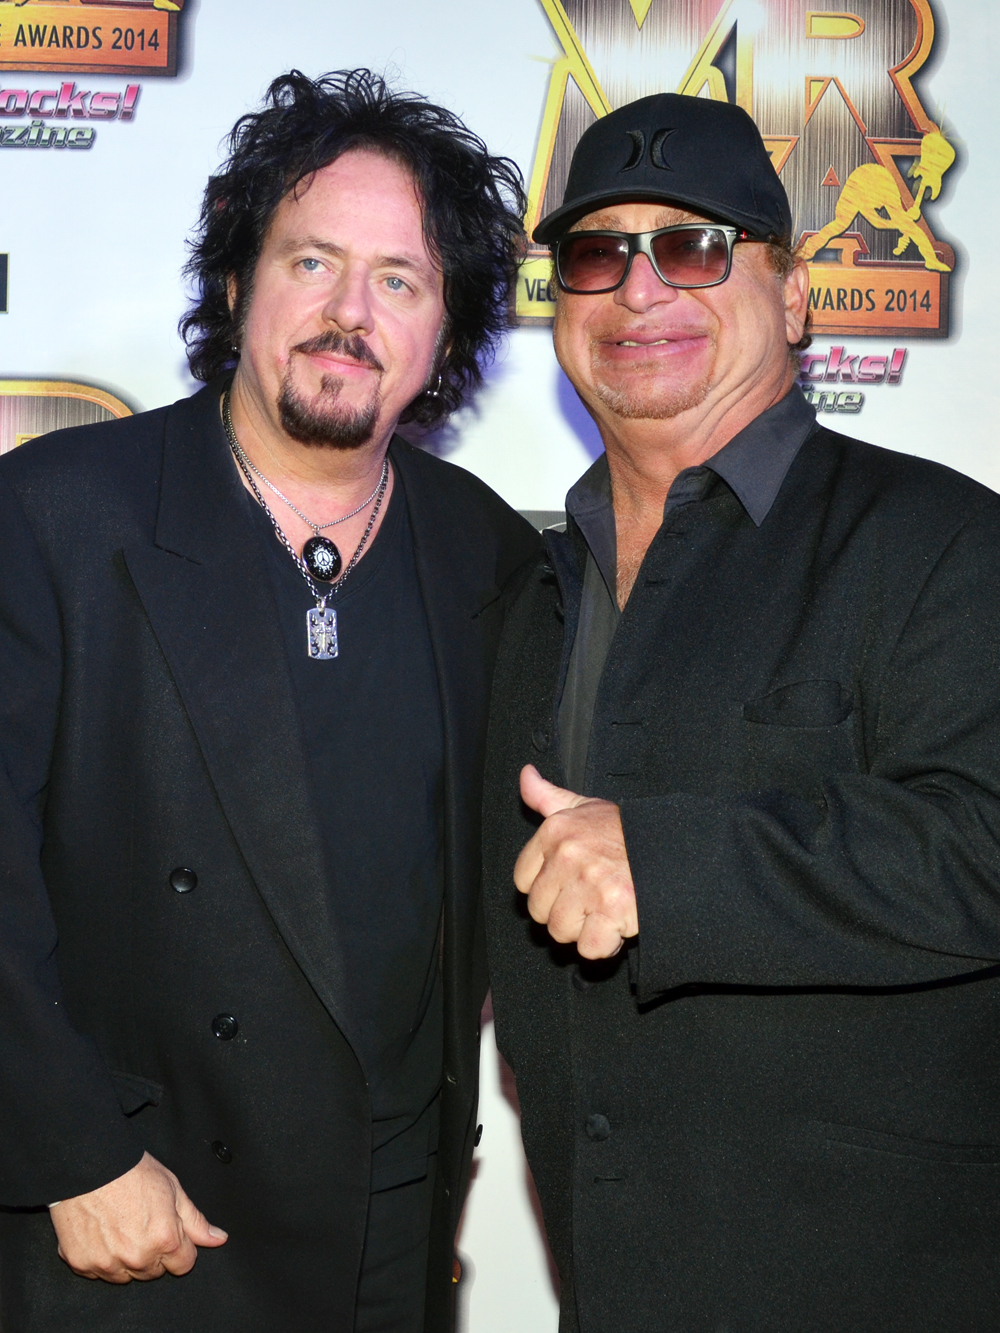 Steve Lukather David Paich - Vegas Rocks Magazine Music Awards 2014 photo credit Stephen Thorburn 63577